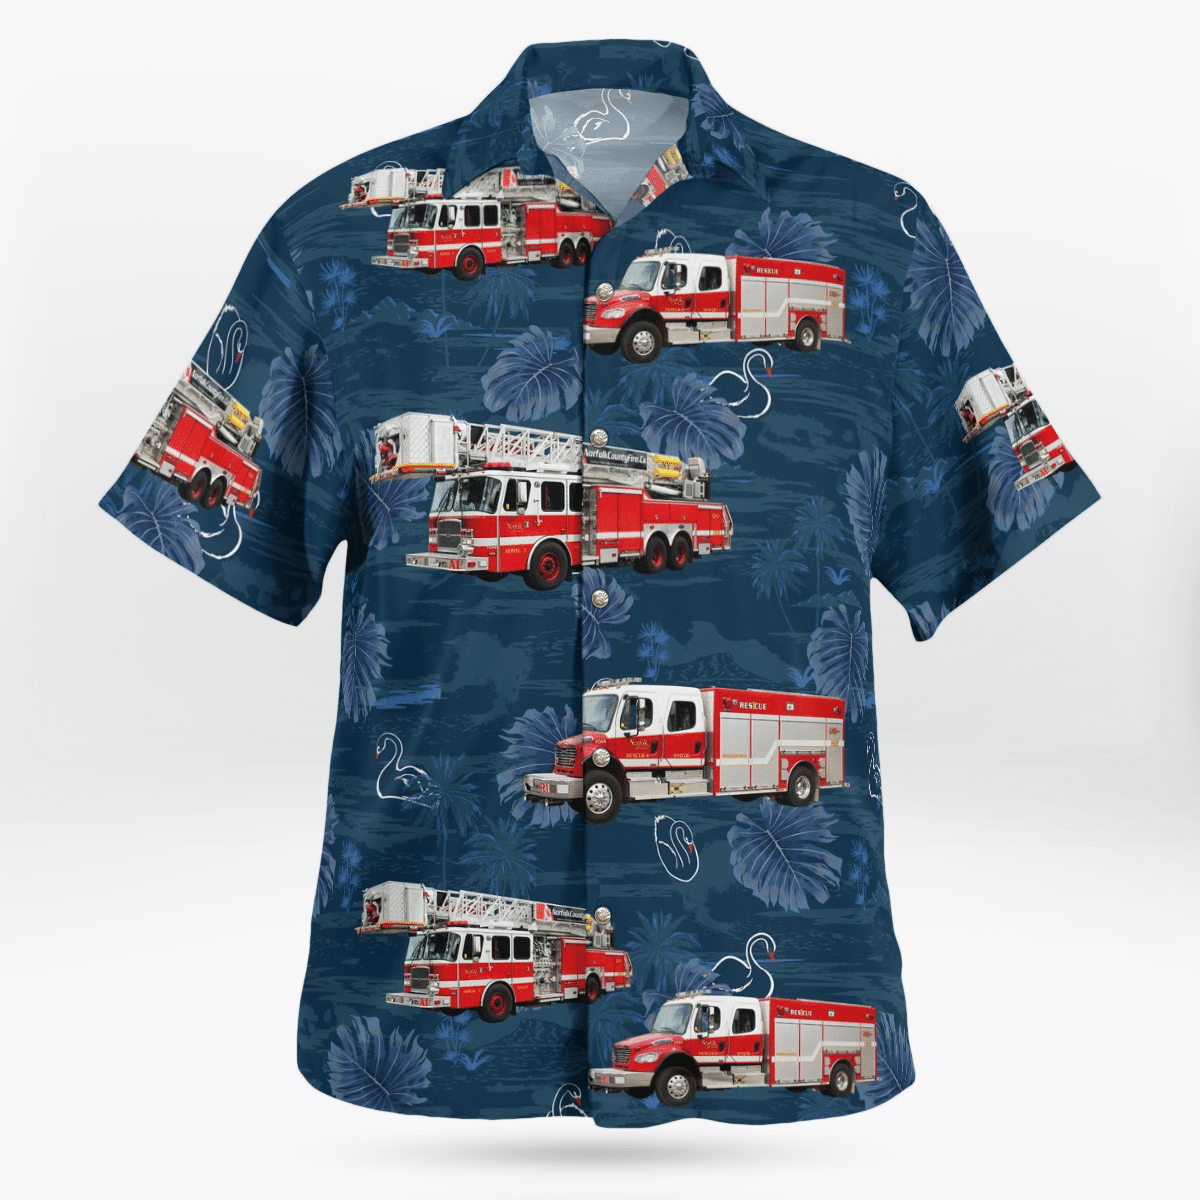 HOT Delhi Ontario Canada Norfolk County Fire Department Fire Station 1 Hawaii Shirt 2